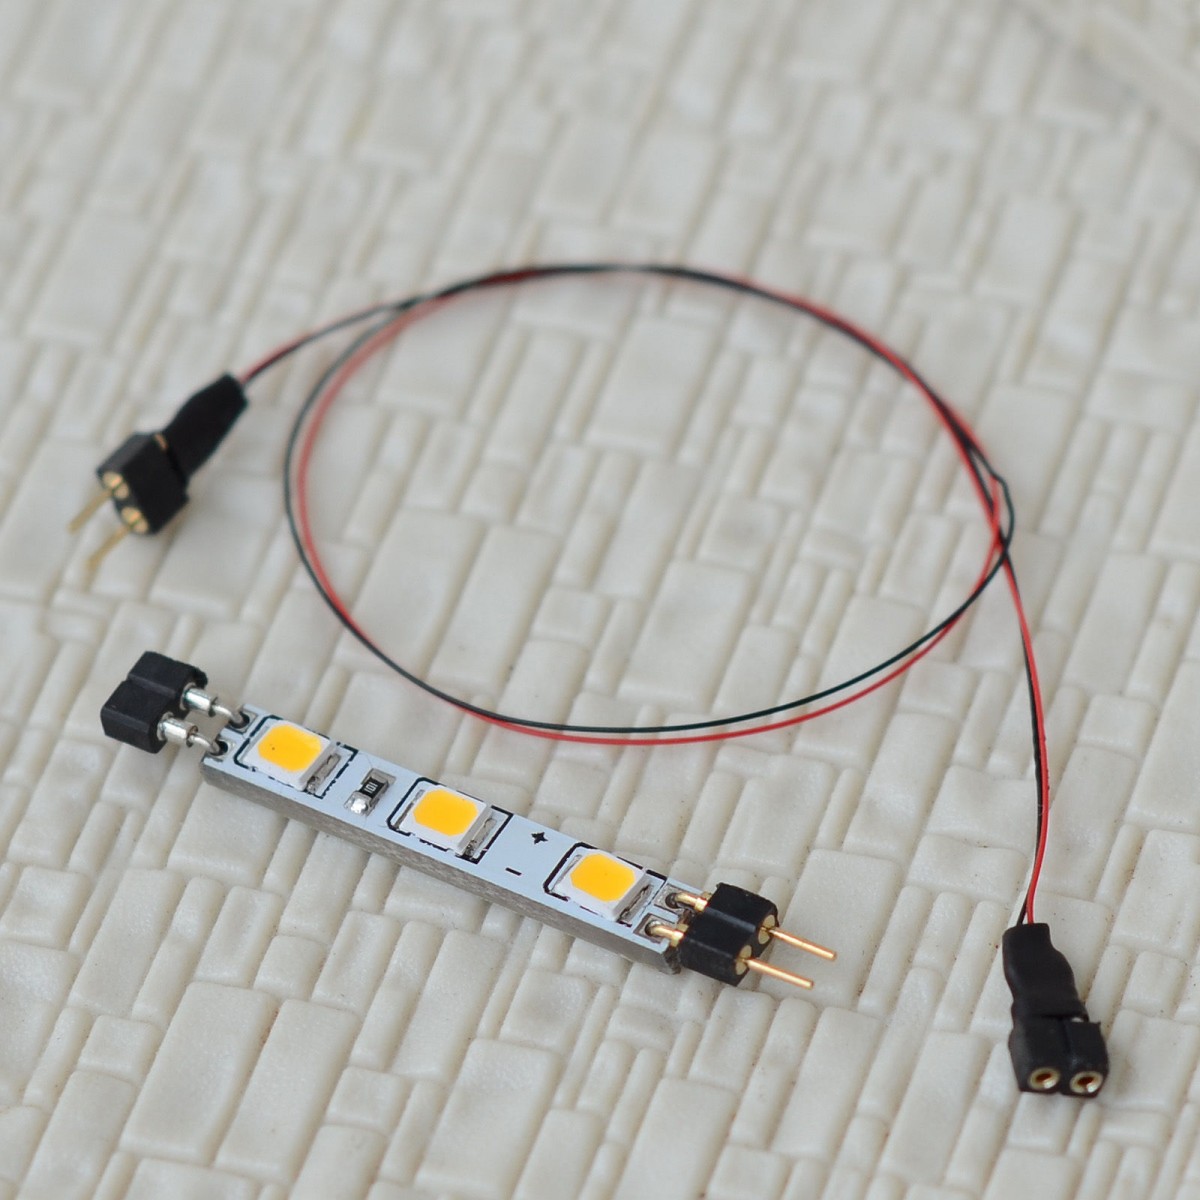 2 x LED lighting strips + Extension Kit connector passenger car lights 4mm wide